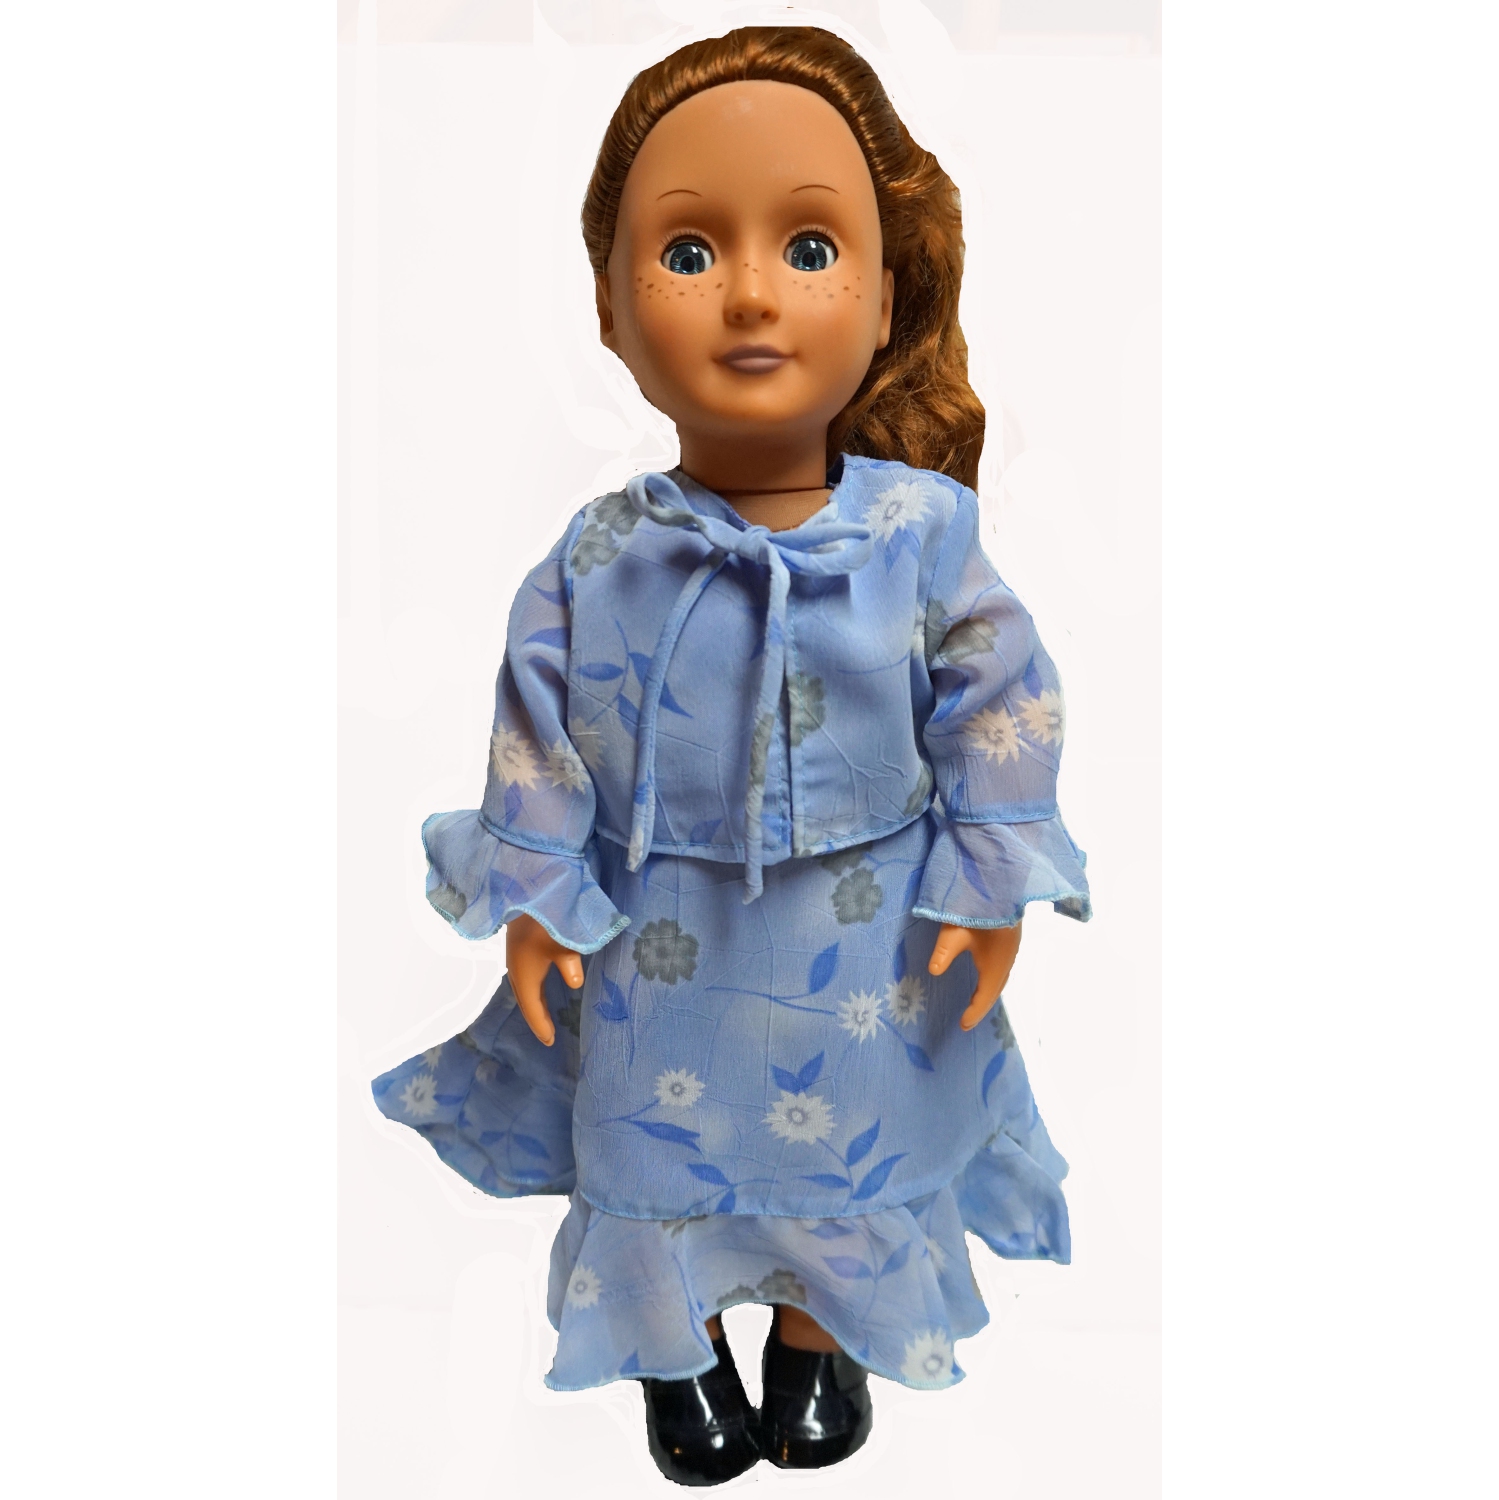 Dusty Blue Chiffon Dress With Jacket Fit 18 Inch Doll Like American Girl